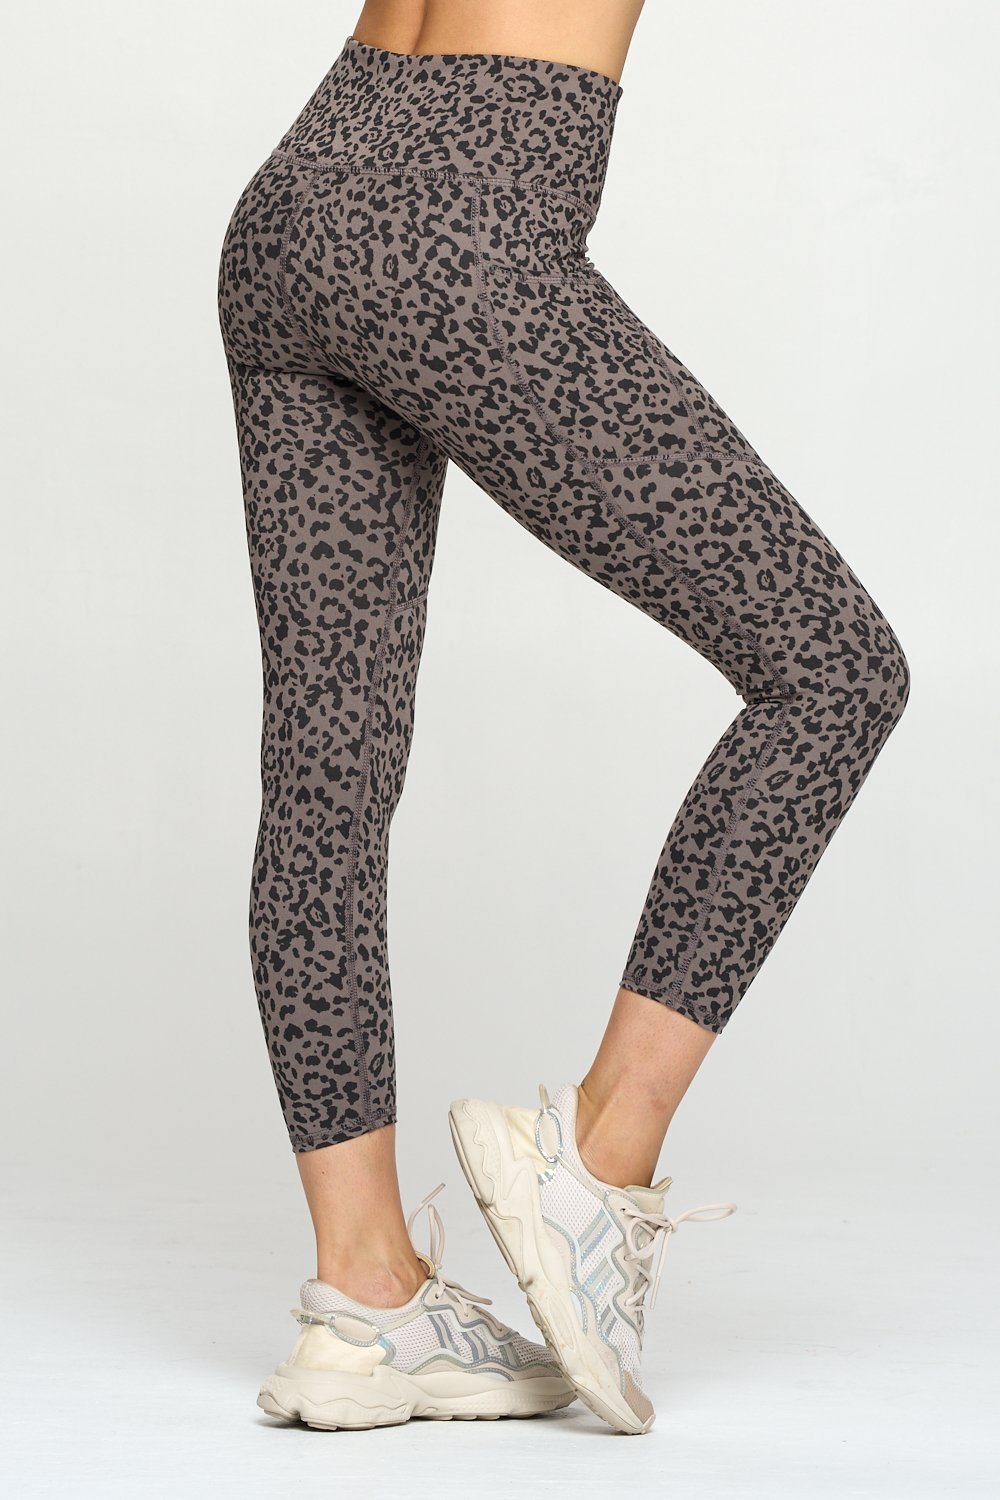 Liz - Brown Abstract Cheetah Pockets 7/8 Legging**FINAL SALE**